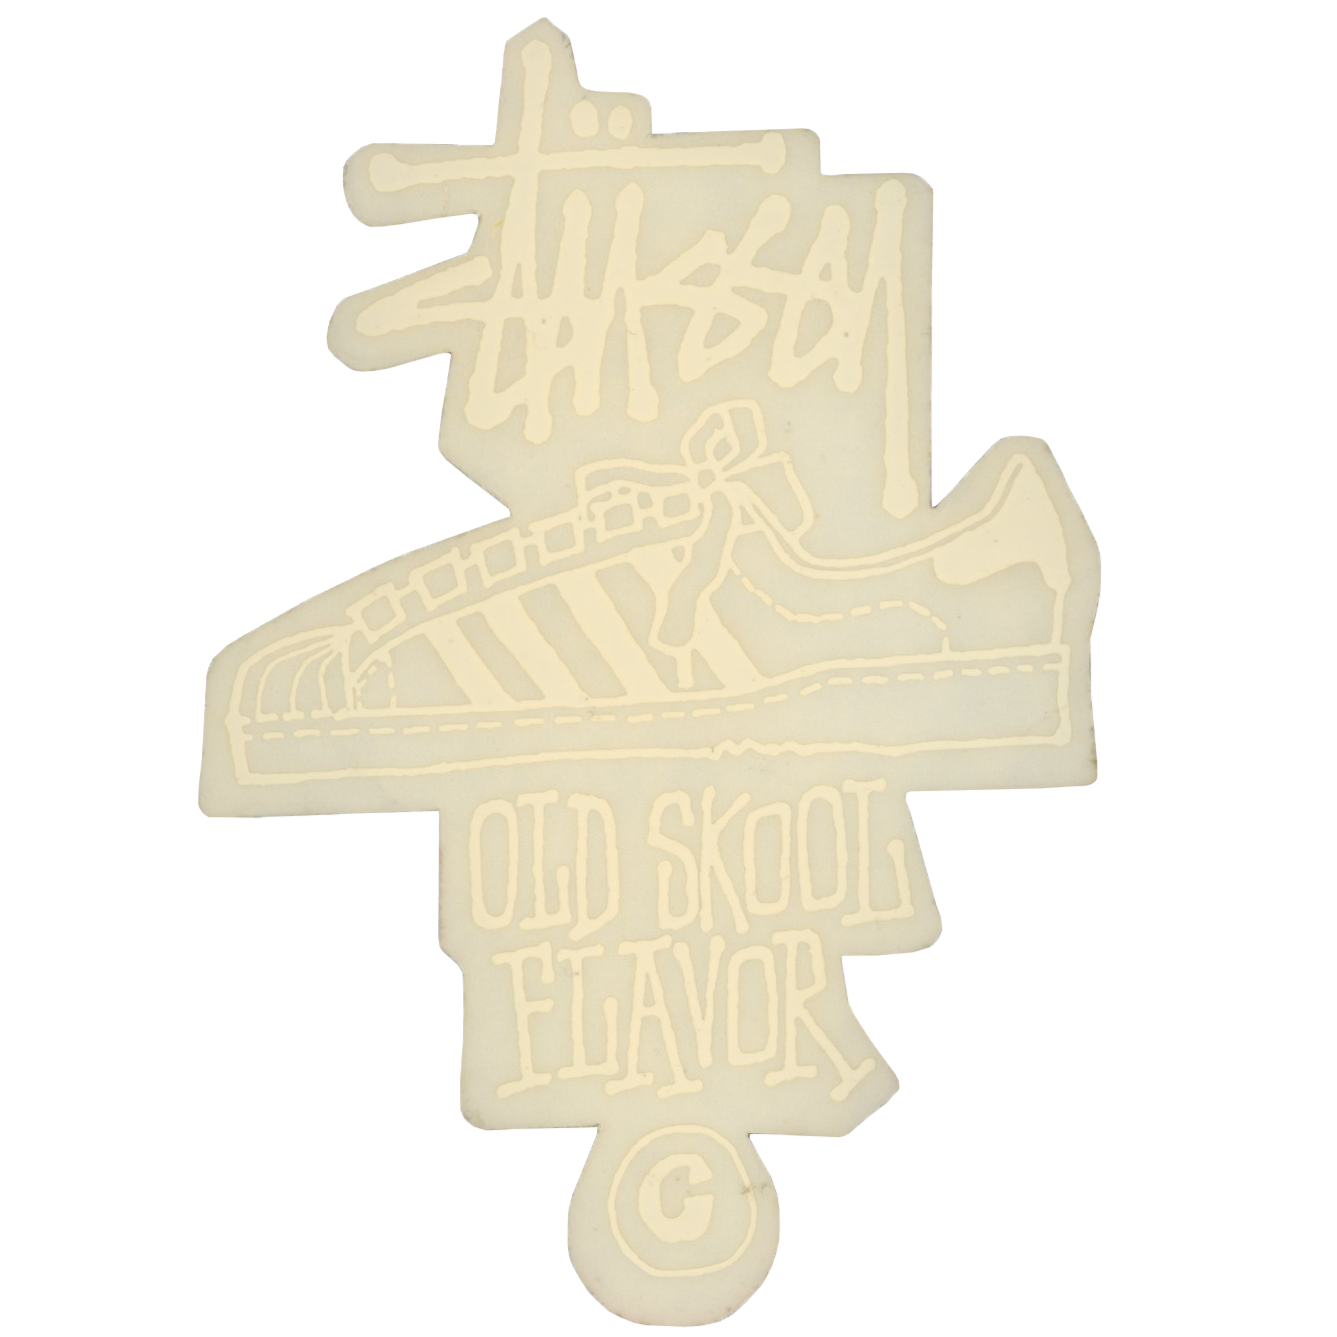 Stussy Old Skool Flavor White Sneaker Sticker